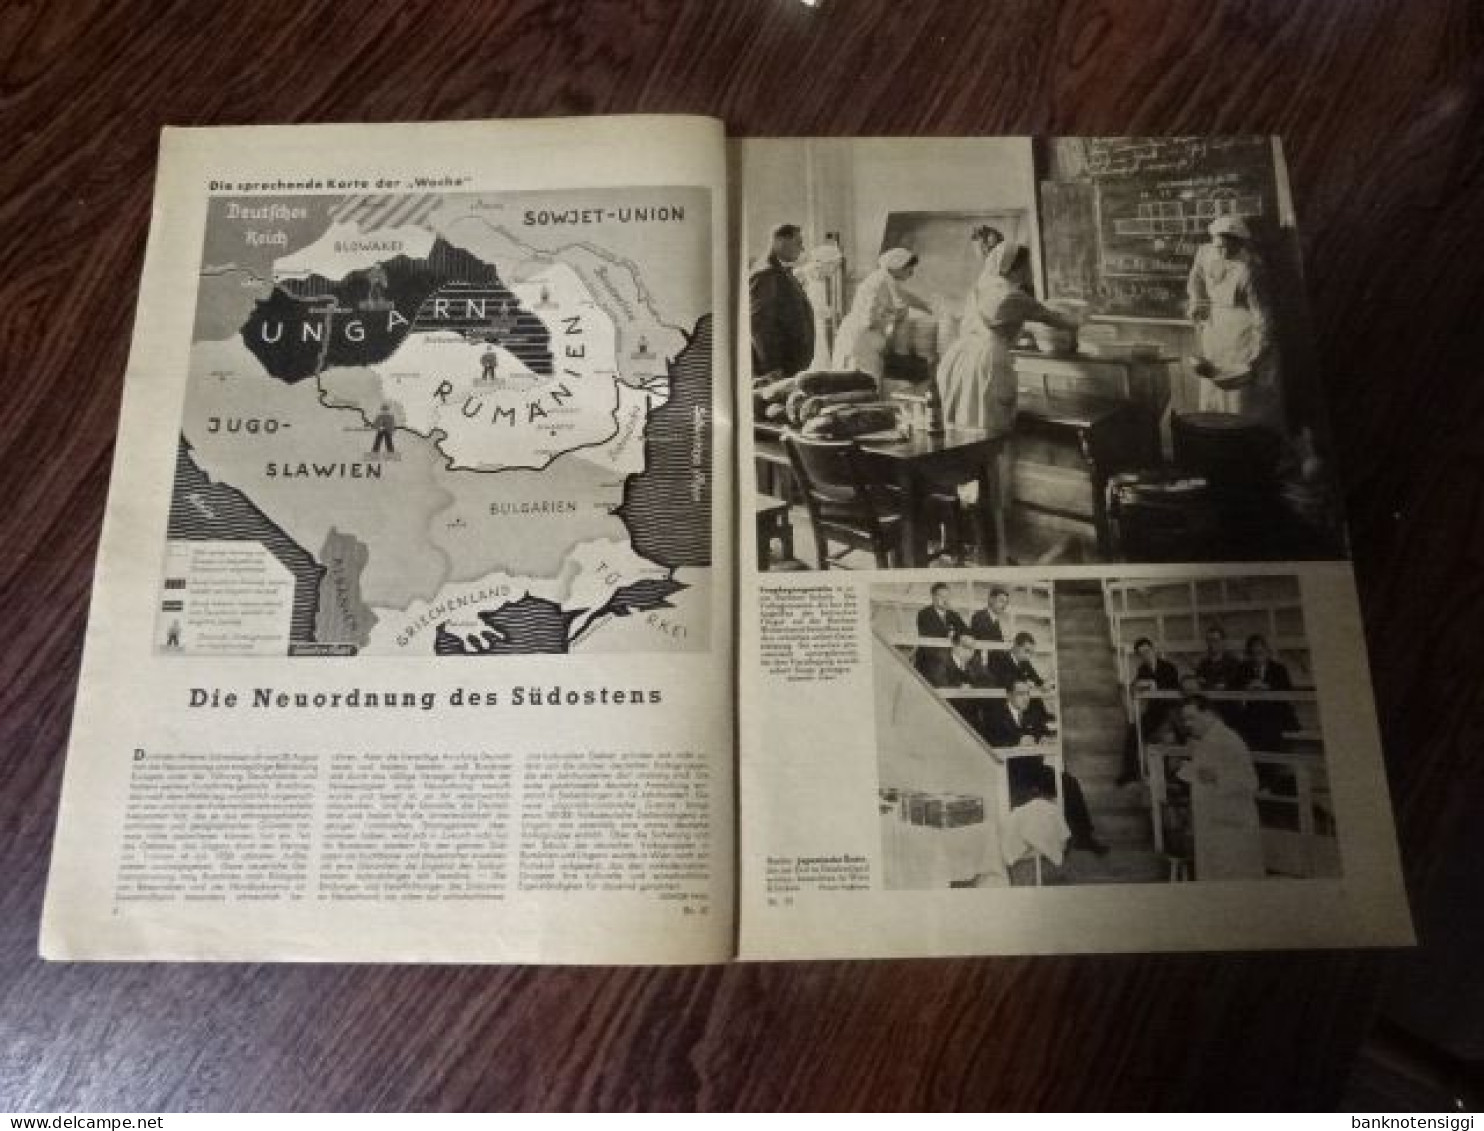 1 Zeitung "Die Woche"  Heft 37  Berlin  11 September   1940 - Contemporary Politics